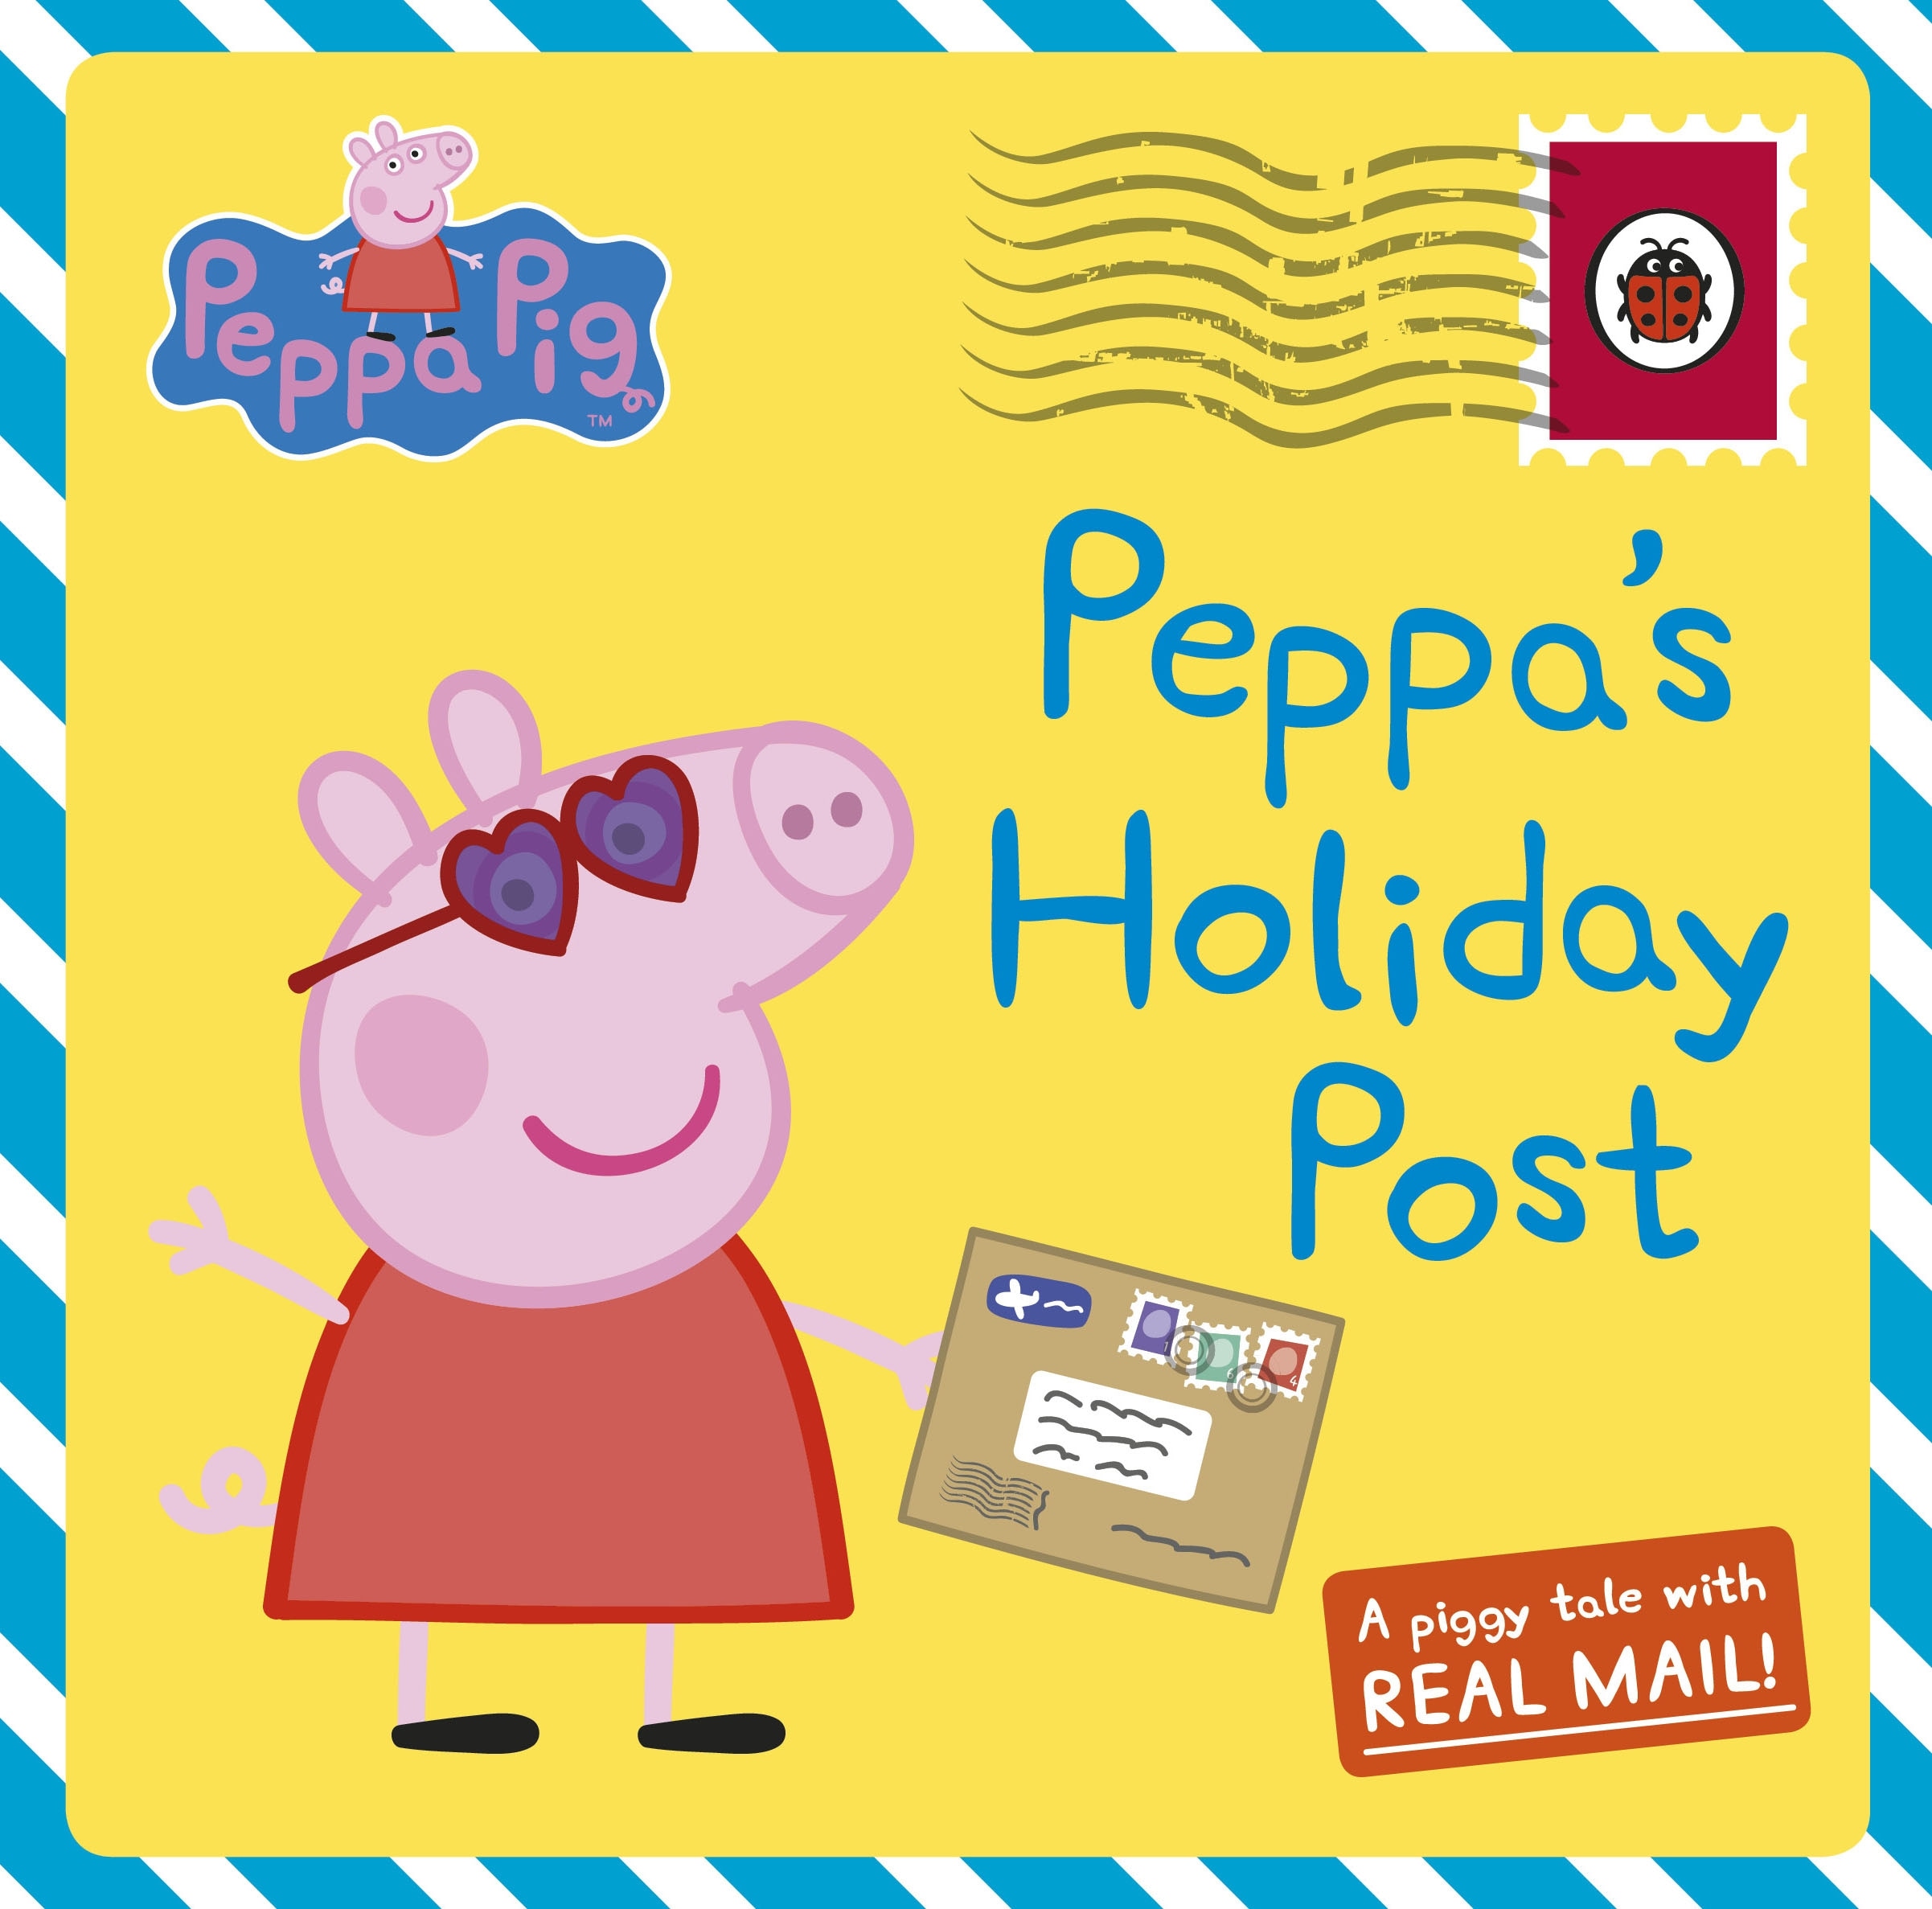 Book “Peppa Pig: Peppa's Holiday Post” by Peppa Pig — June 15, 2017